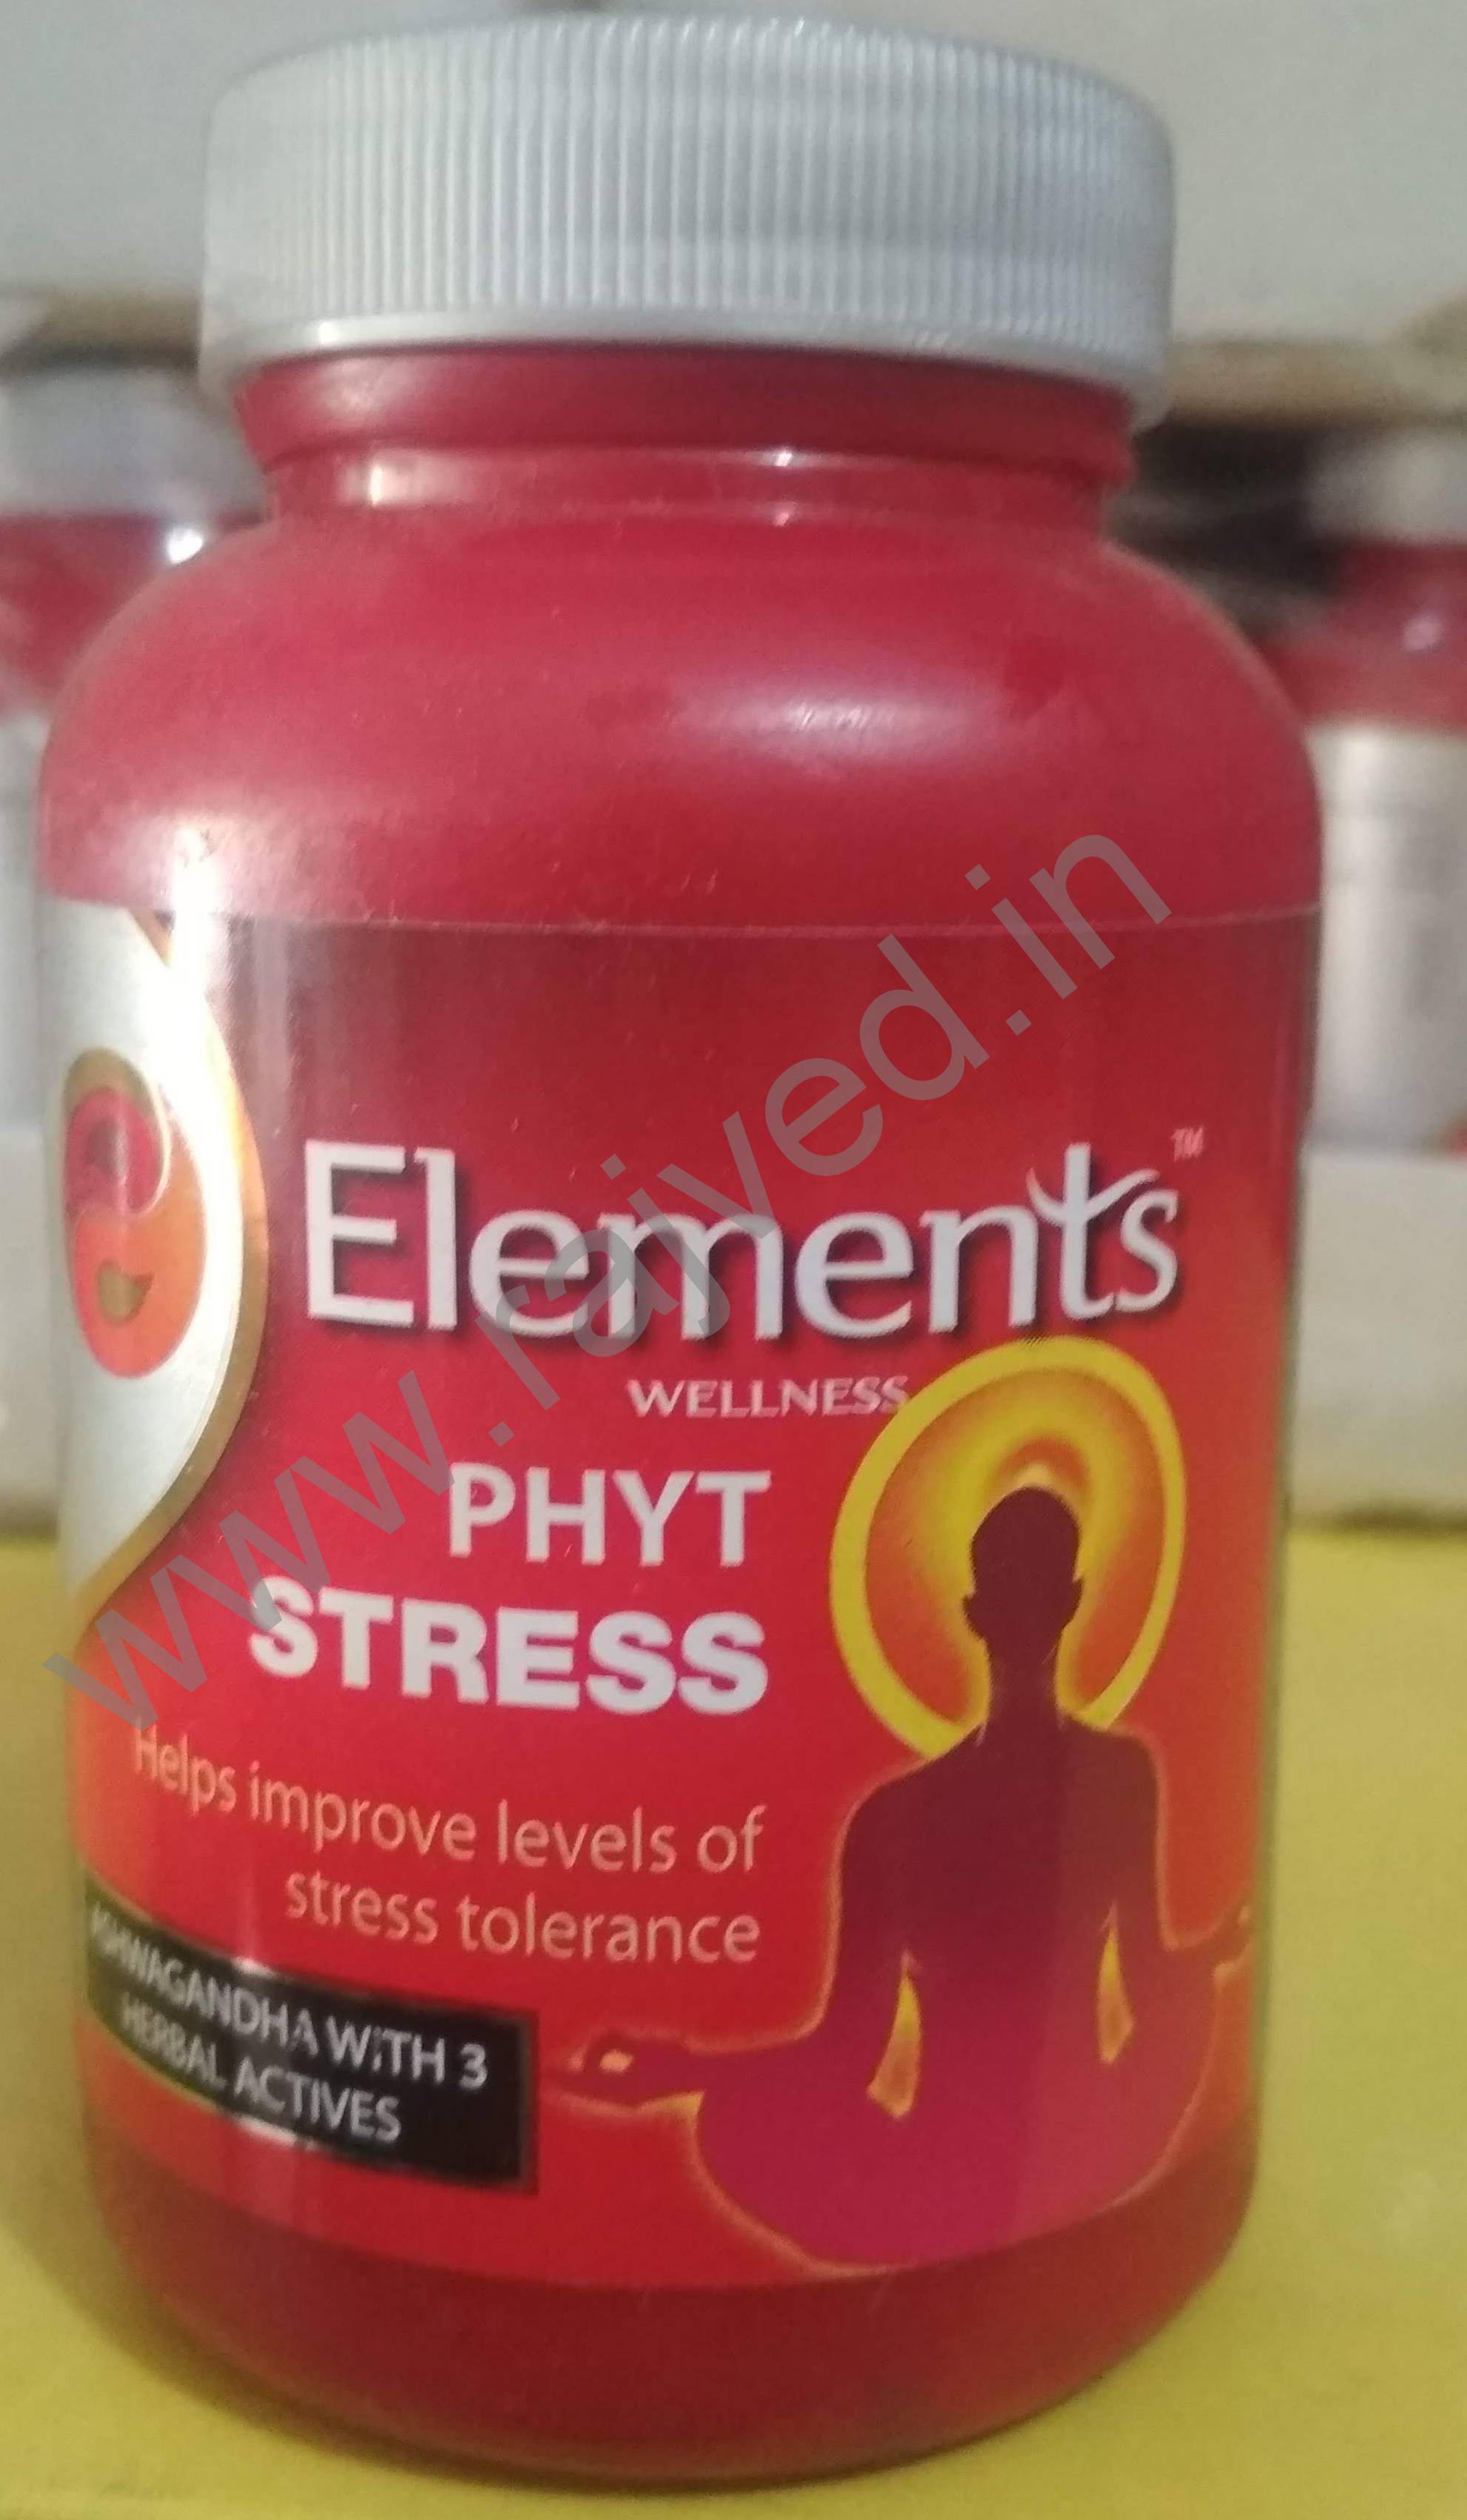 phyt stress capsule 60cap upto 15% off elements